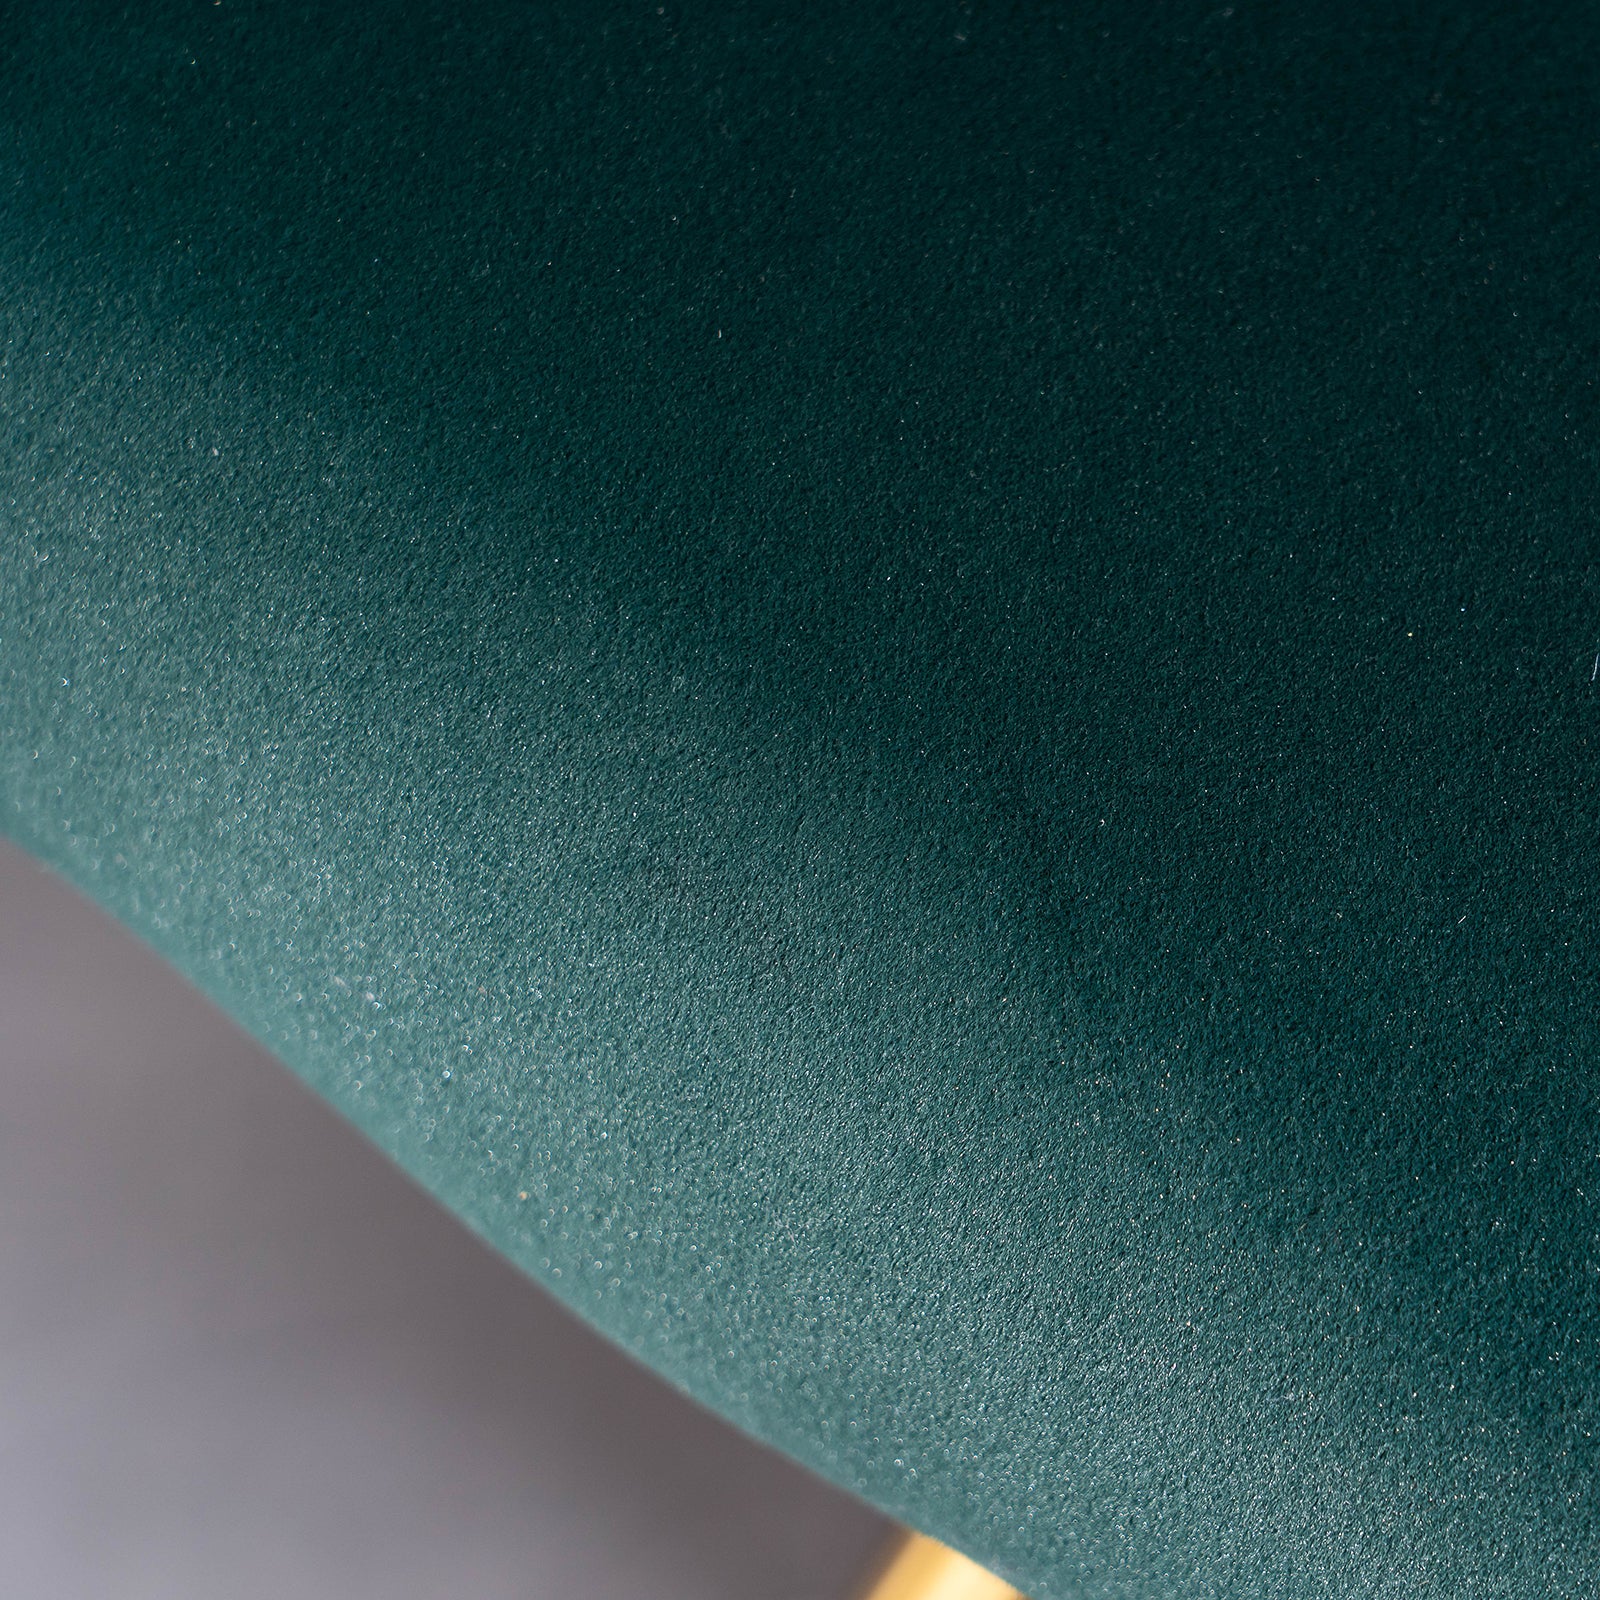 Modern Velvet Fabric Material Adjustable Height 360 revolving with Gold Metal Legs - Dark Green